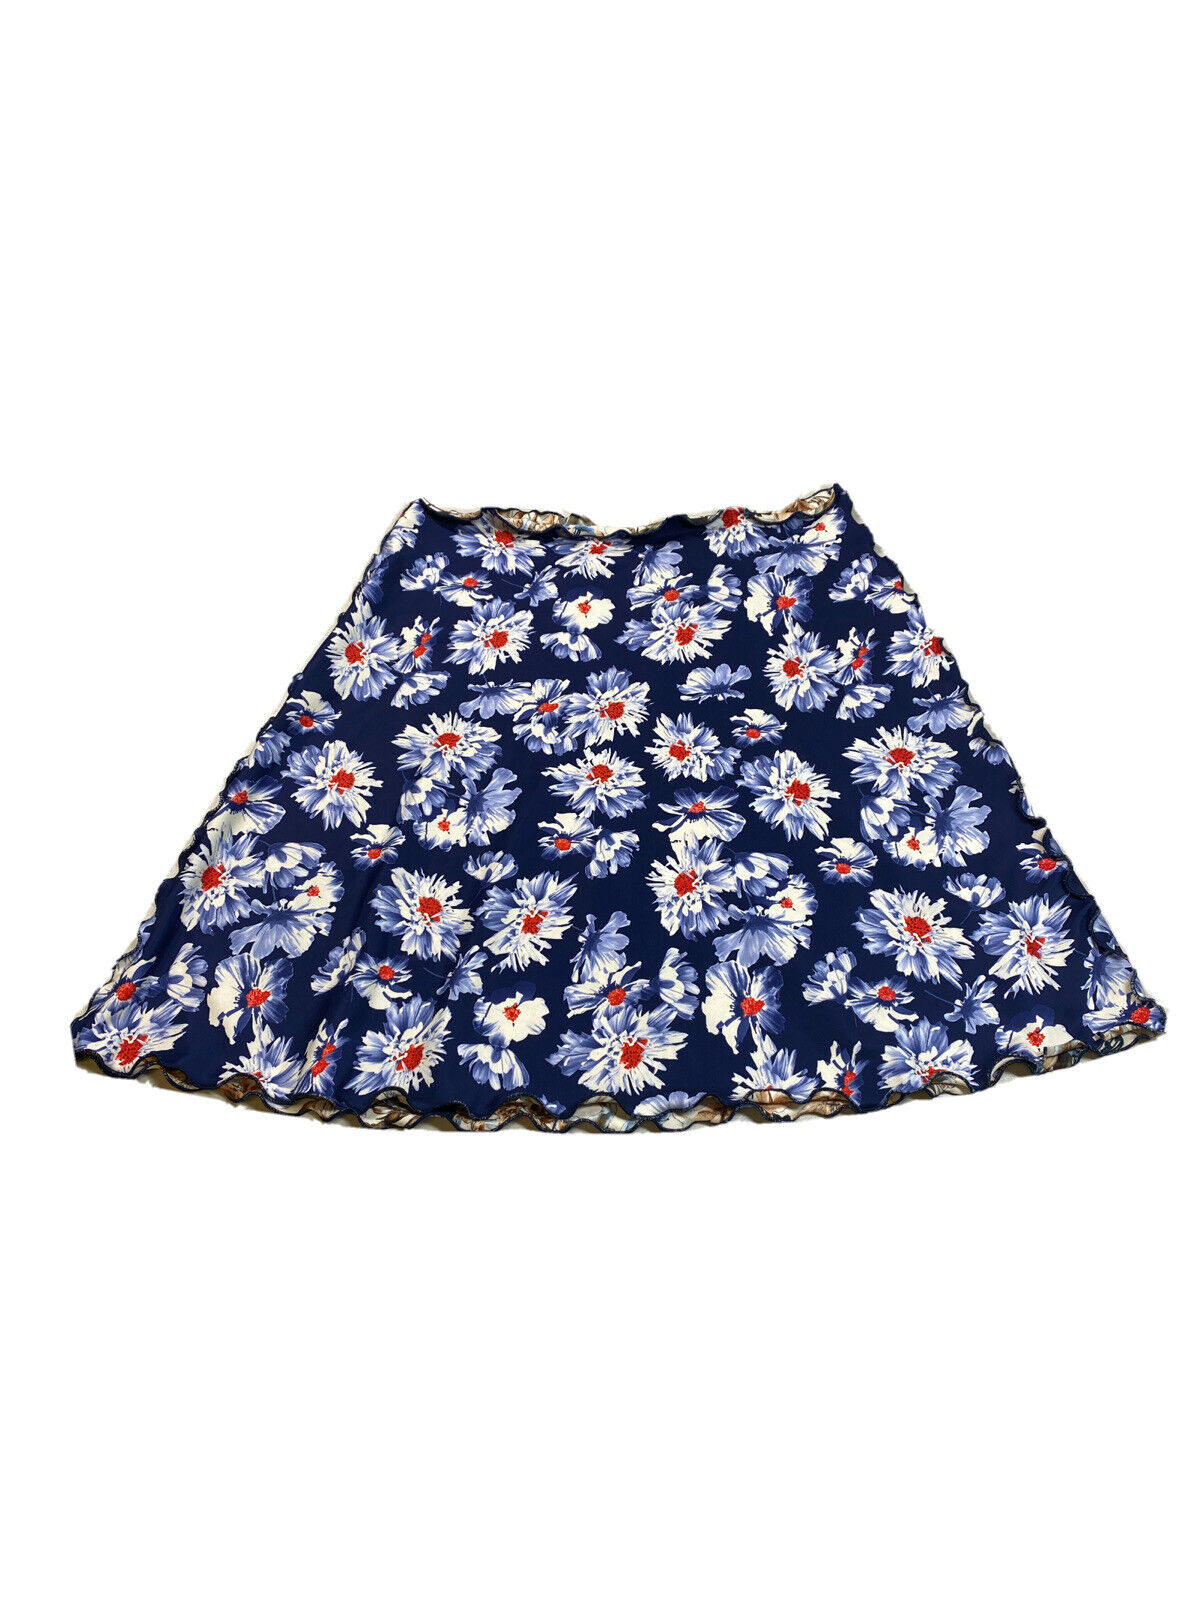 NEW Haystacks Women's Blue Floral Switchstacks Reversible Bias Skirt - XL